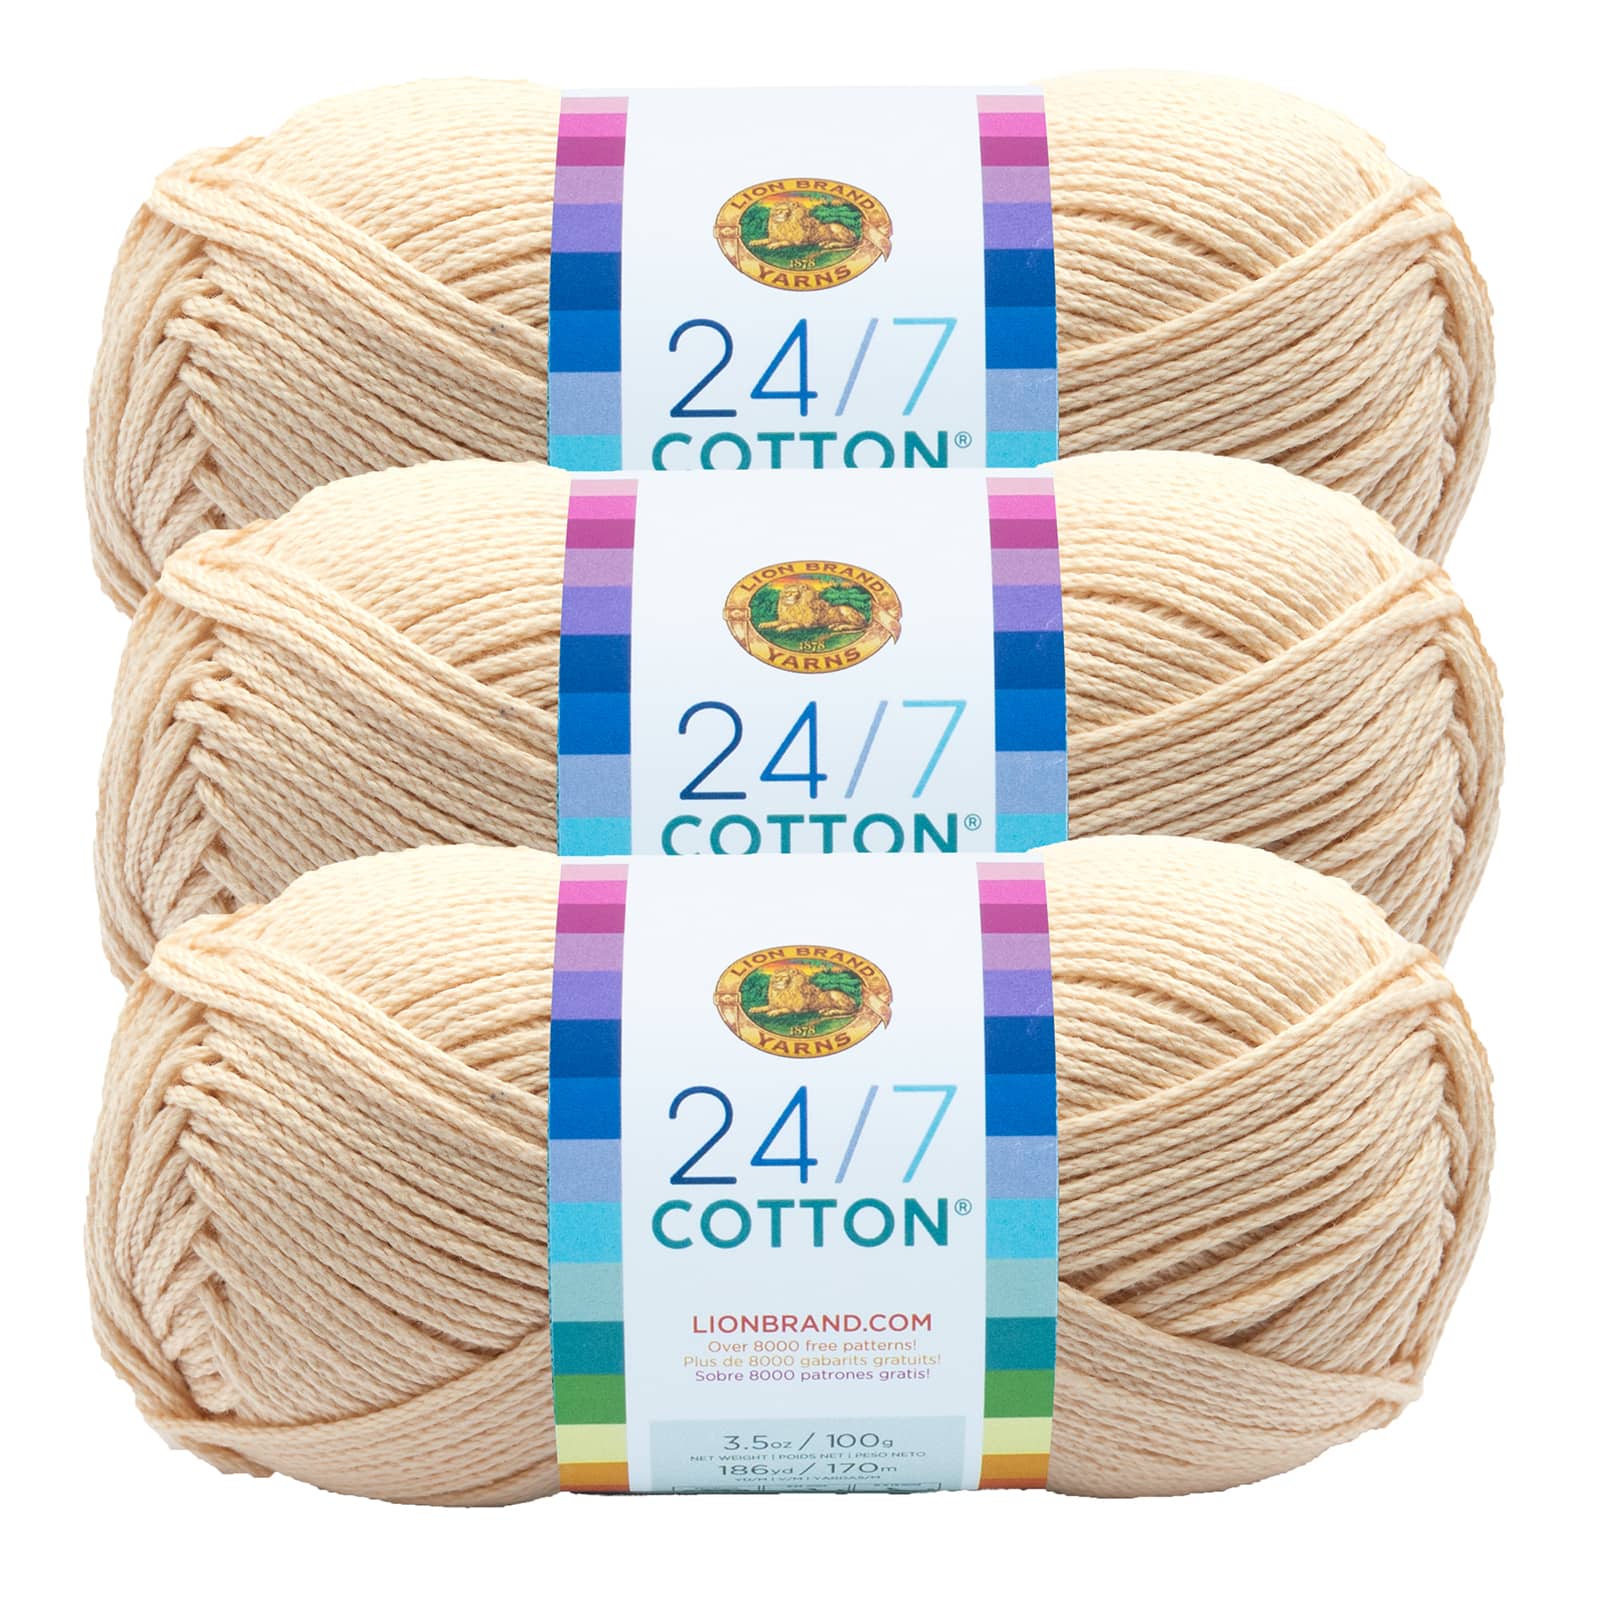 Lion Brand Yarn 24/7 Cotton Hay Bale Mercerized Natural Fiber Medium Cotton Green Yarn 3 Pack, Size: 3.5 oz